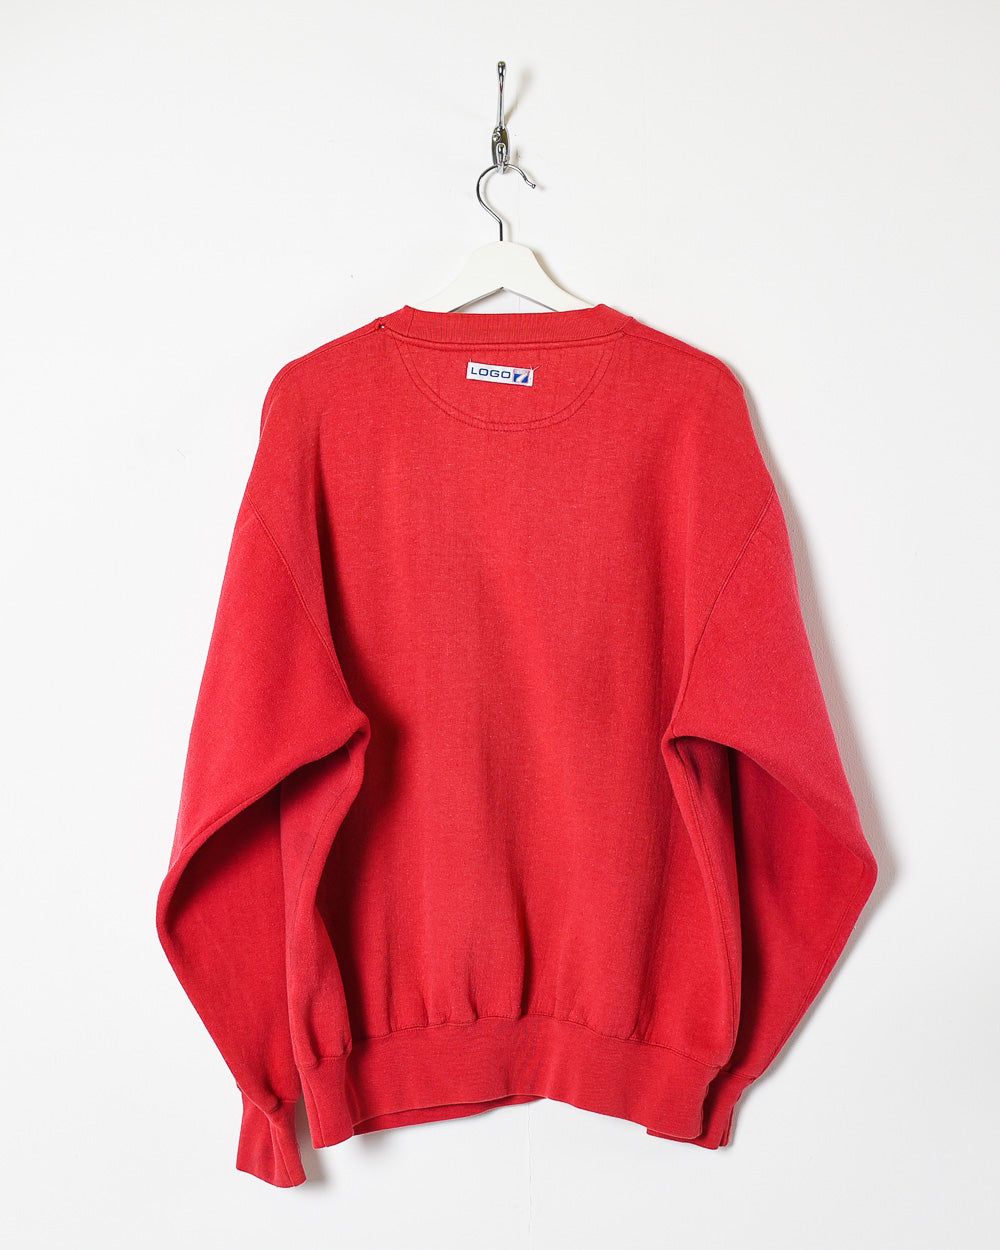 Vintage 90s Cotton Mix Red Logo 7 San Francisco 49ers Sweatshirt